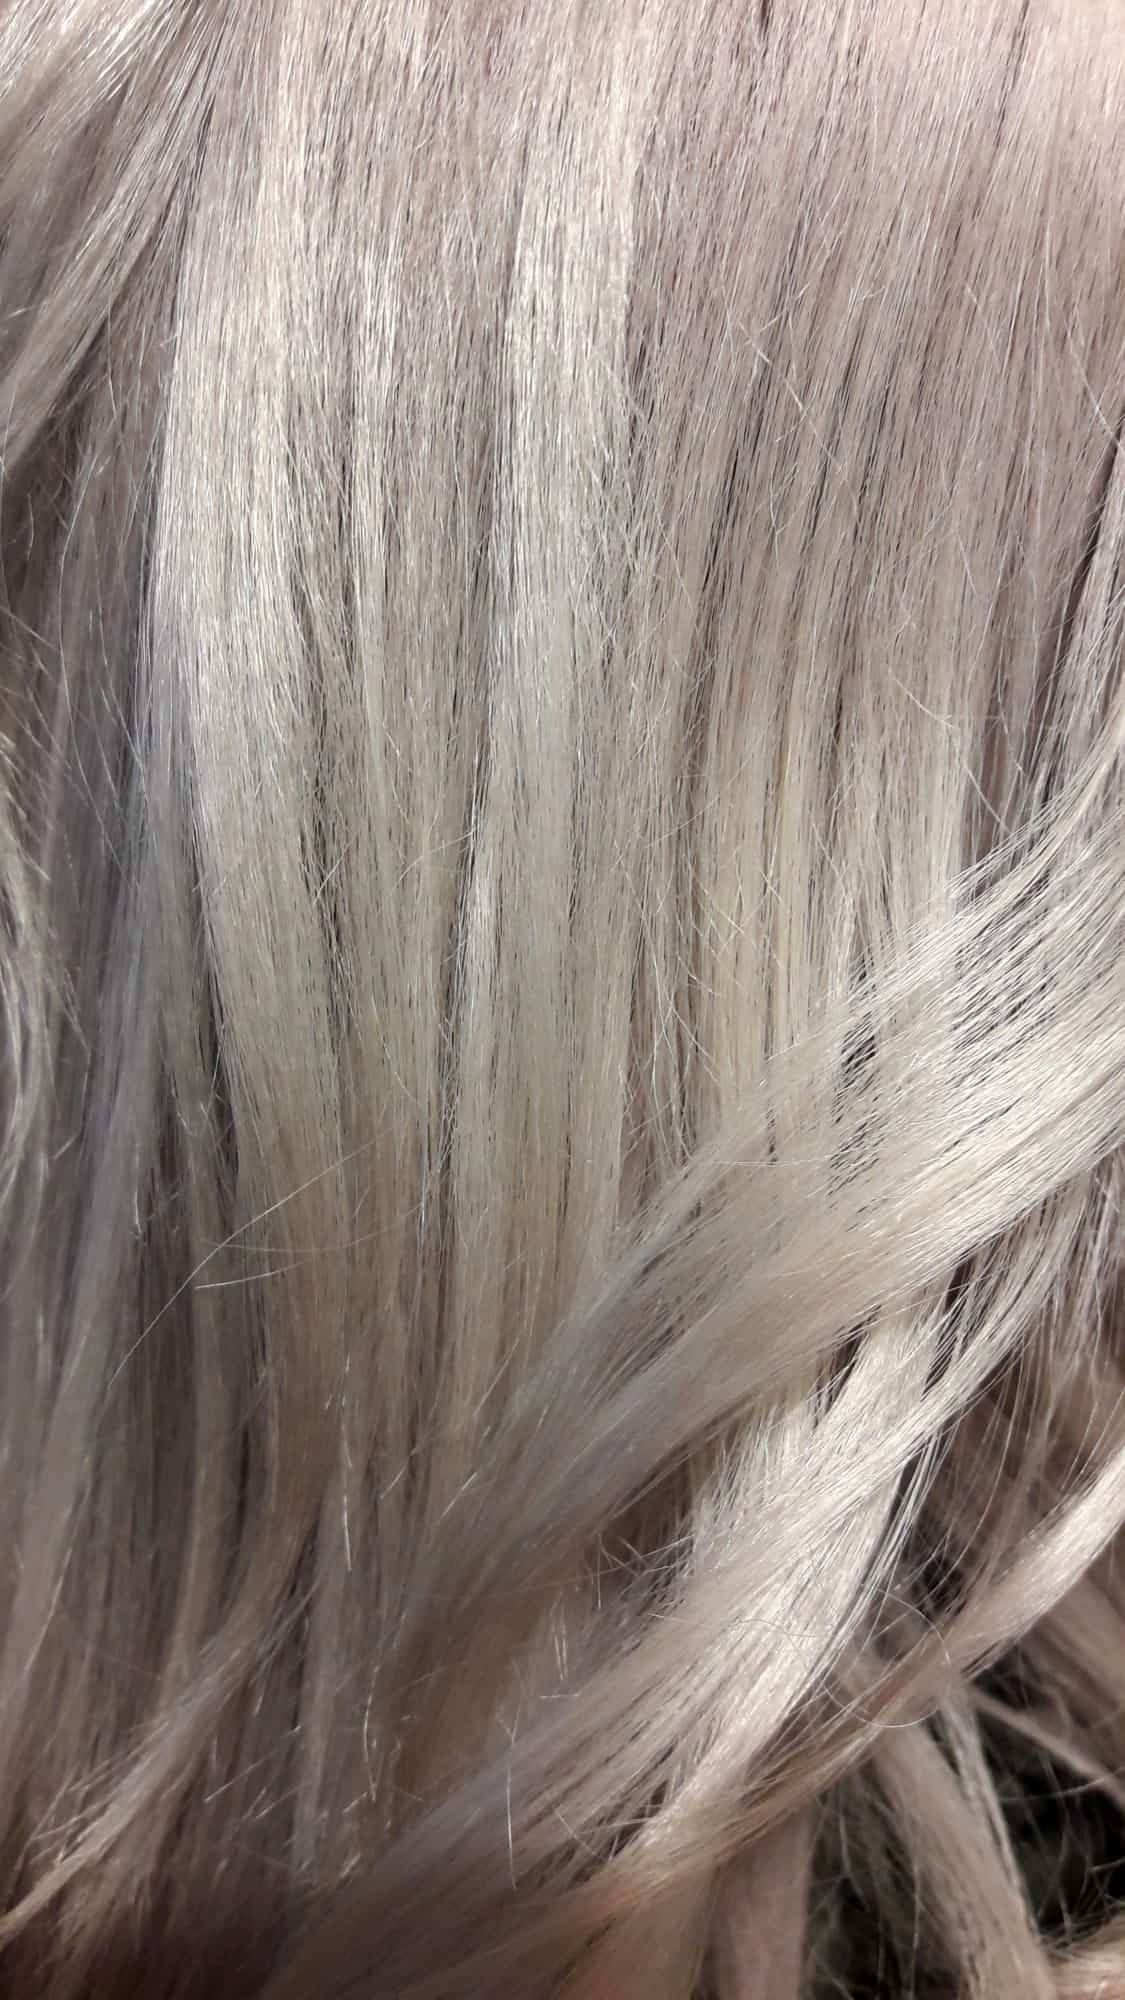 Silbergraue haare färben